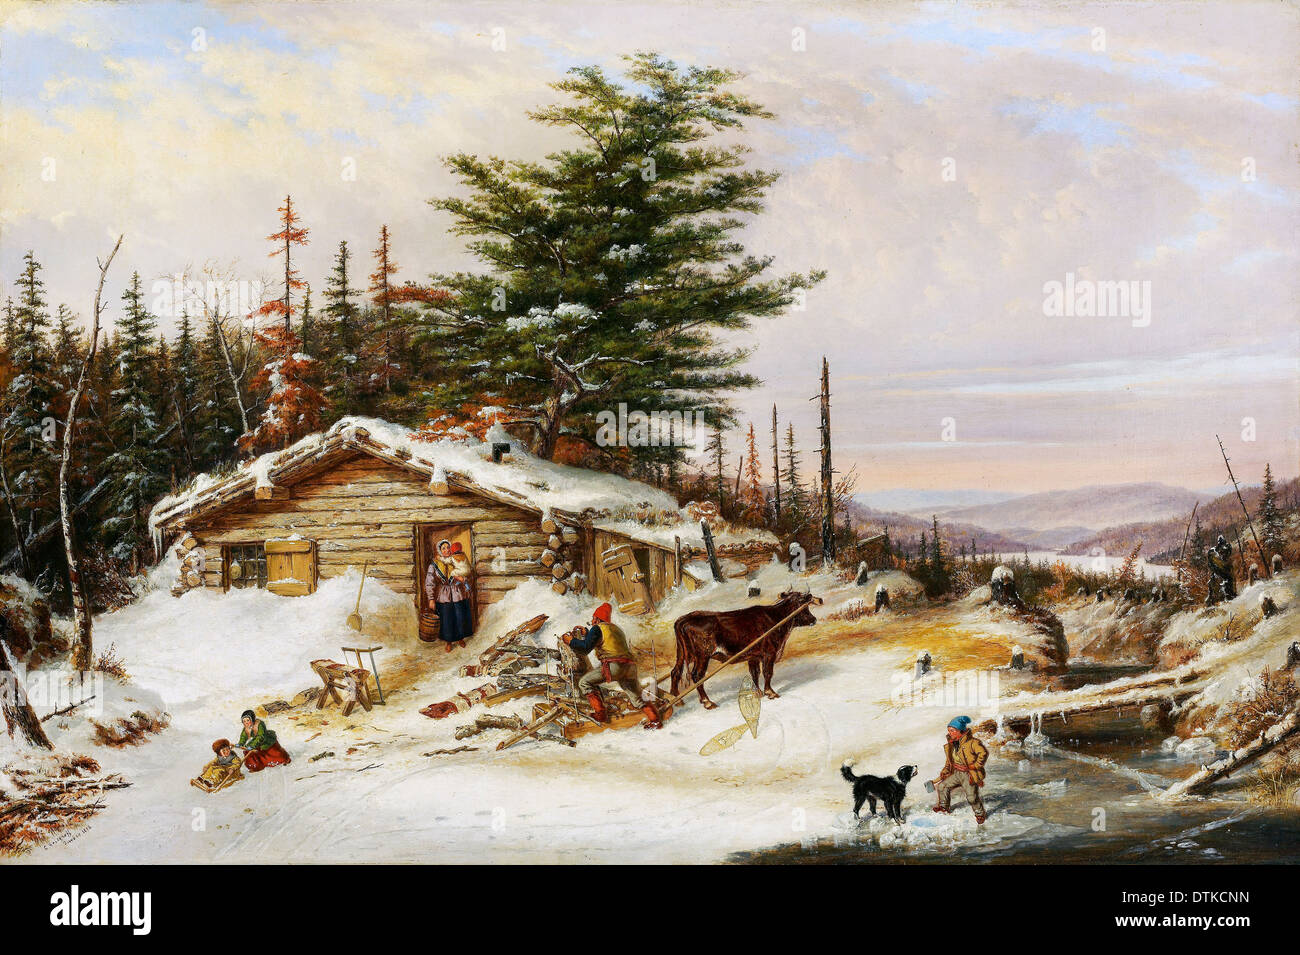 Cornelius Krieghoff, Settler's Log House 1856 Oil on canvas. Art Gallery of Ontario, Toronto, Canada. Stock Photo